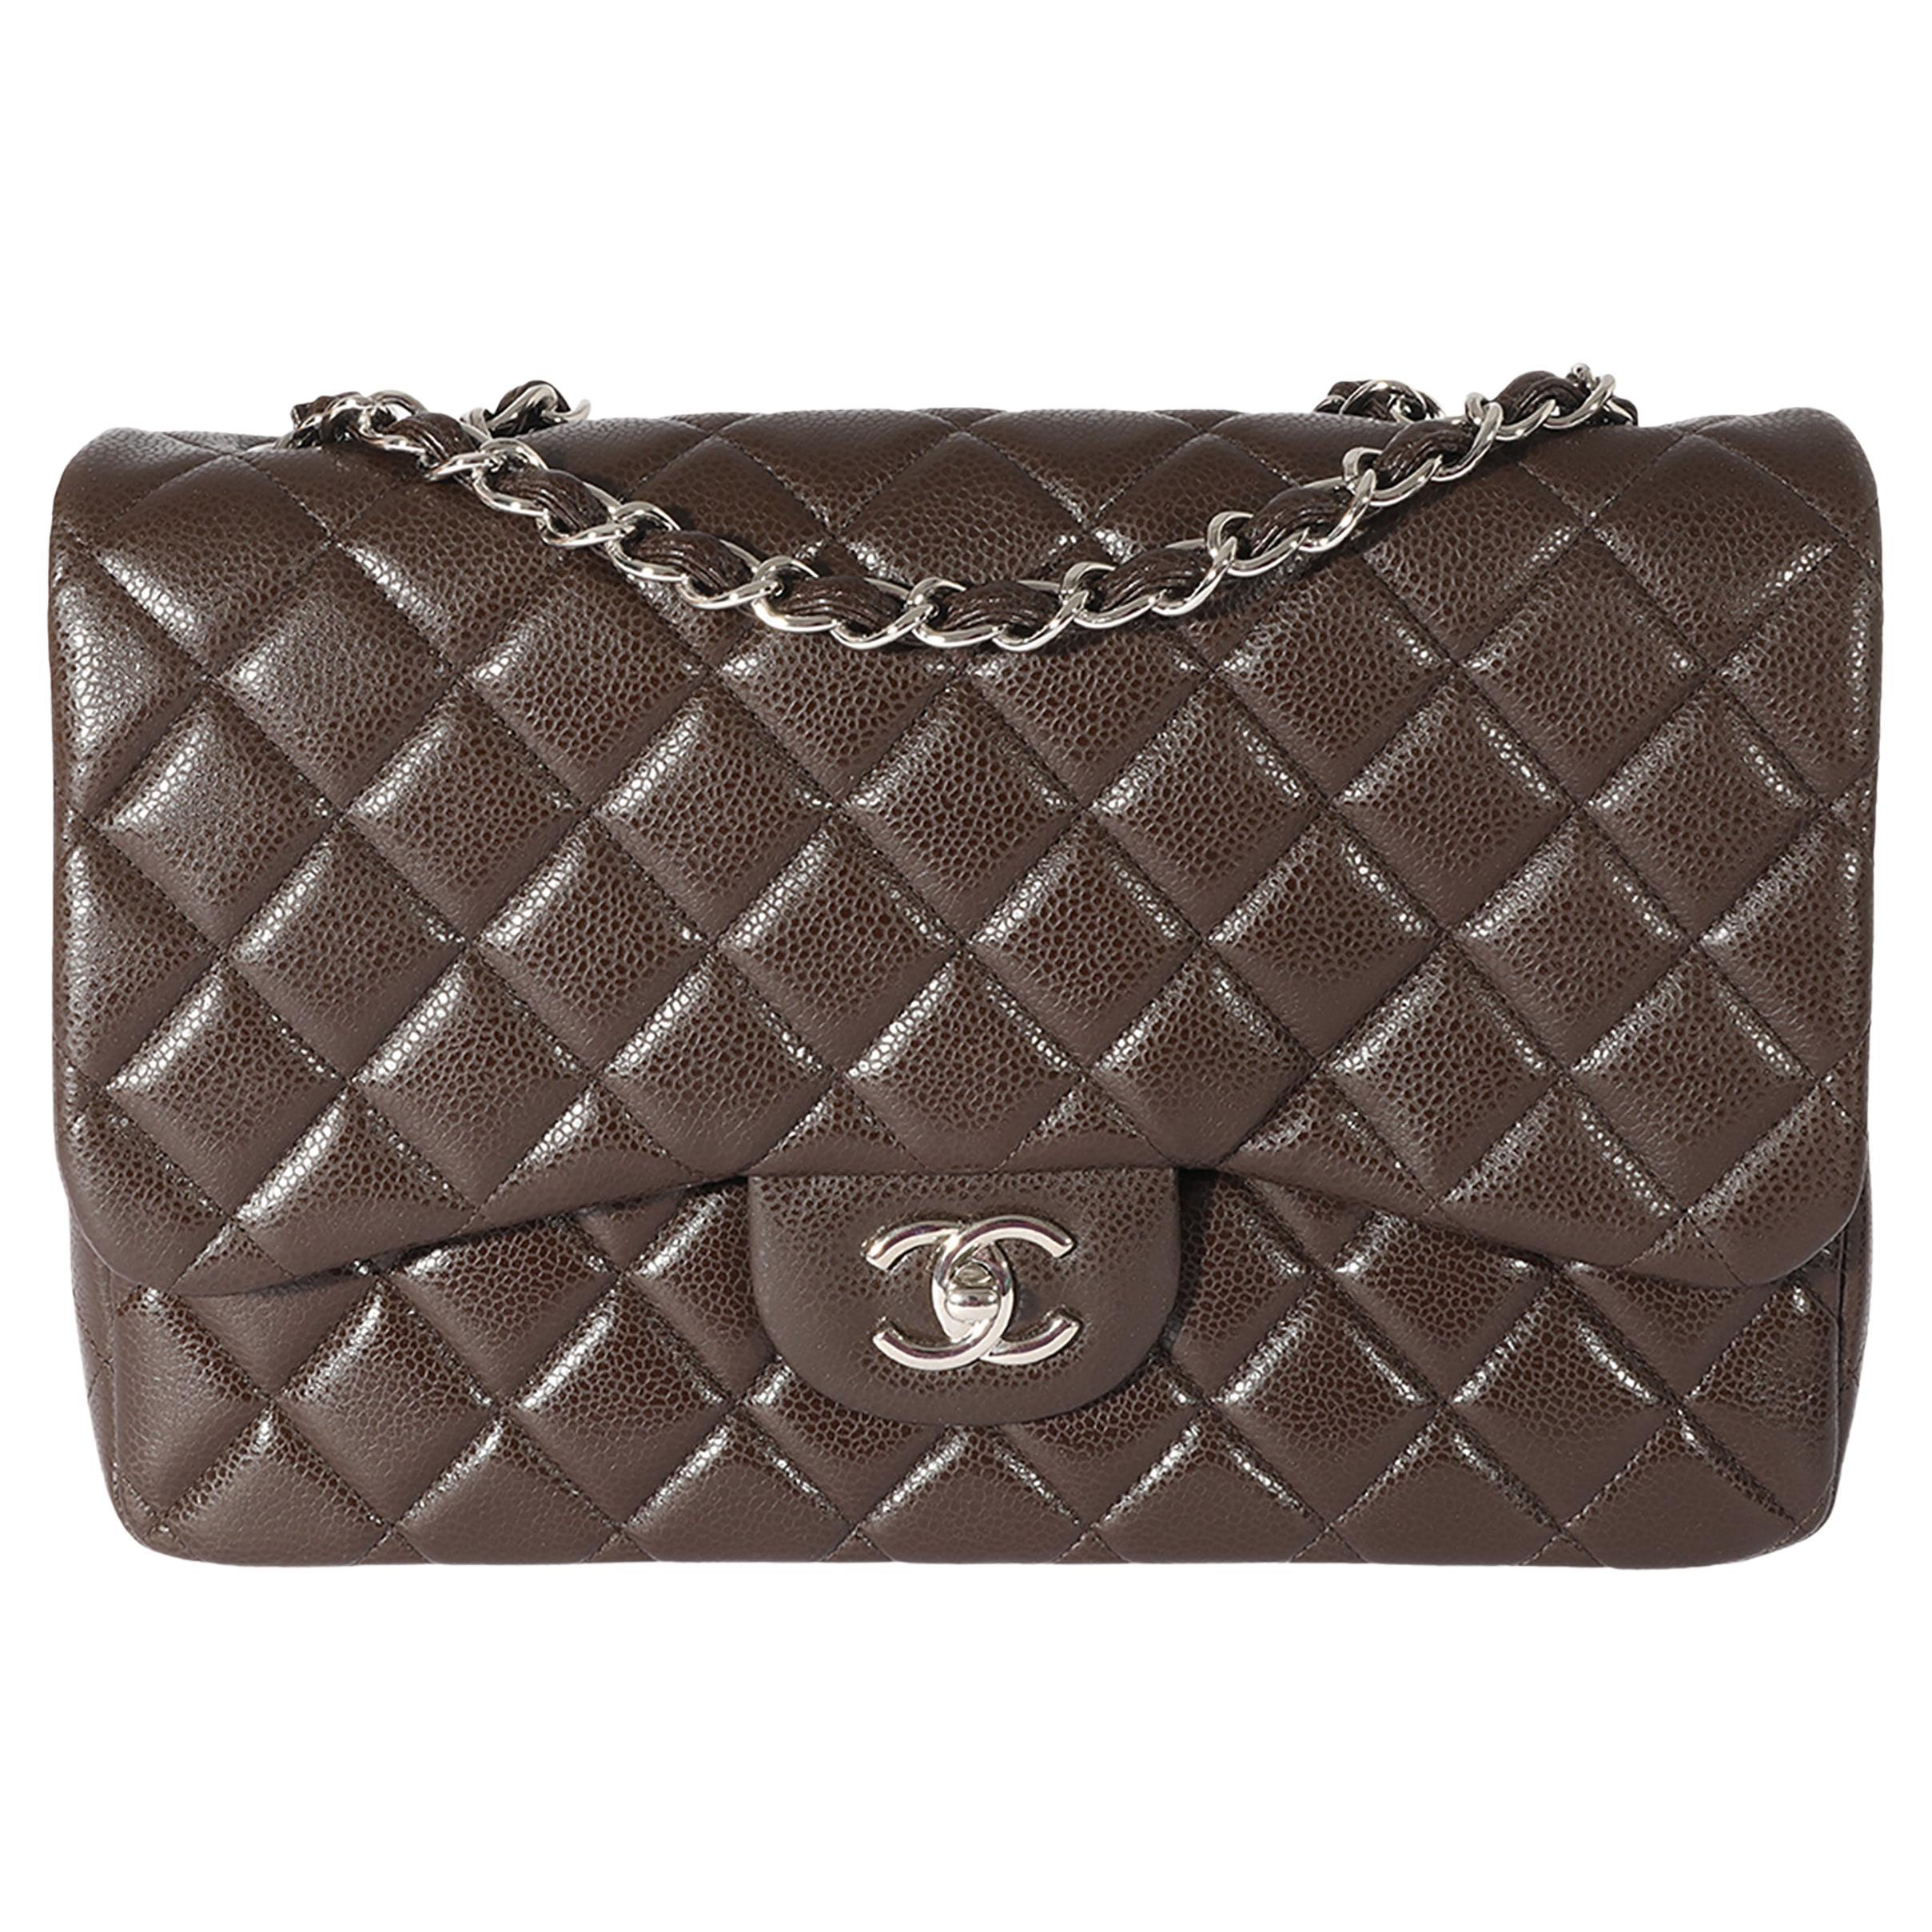 Chanel Brown Caviar Leather Classic Jumbo Singl Flap